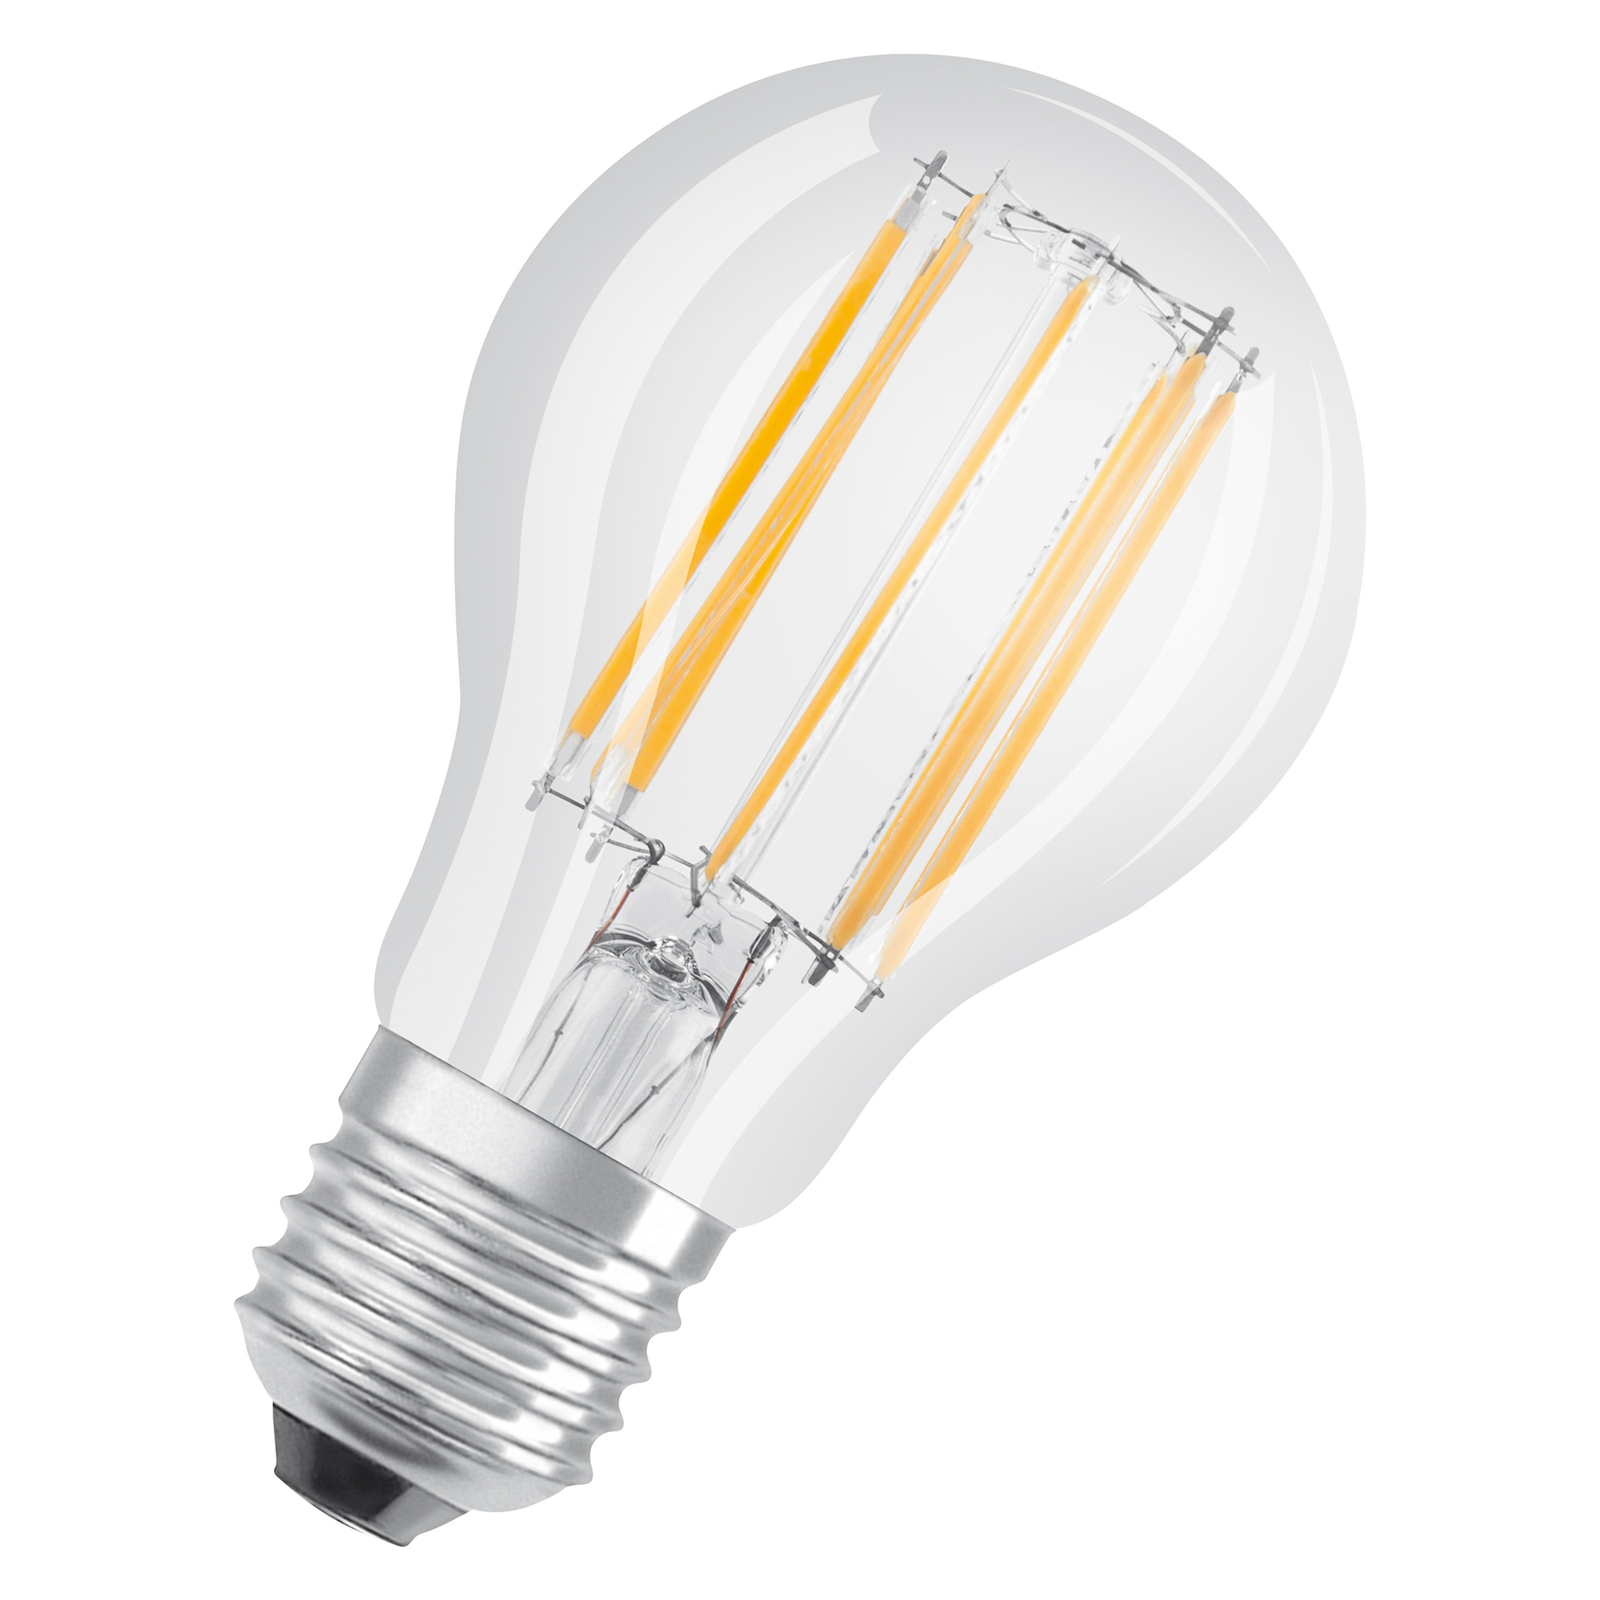 filament lamp E27 Base 11W per 3 | Lampen24.be